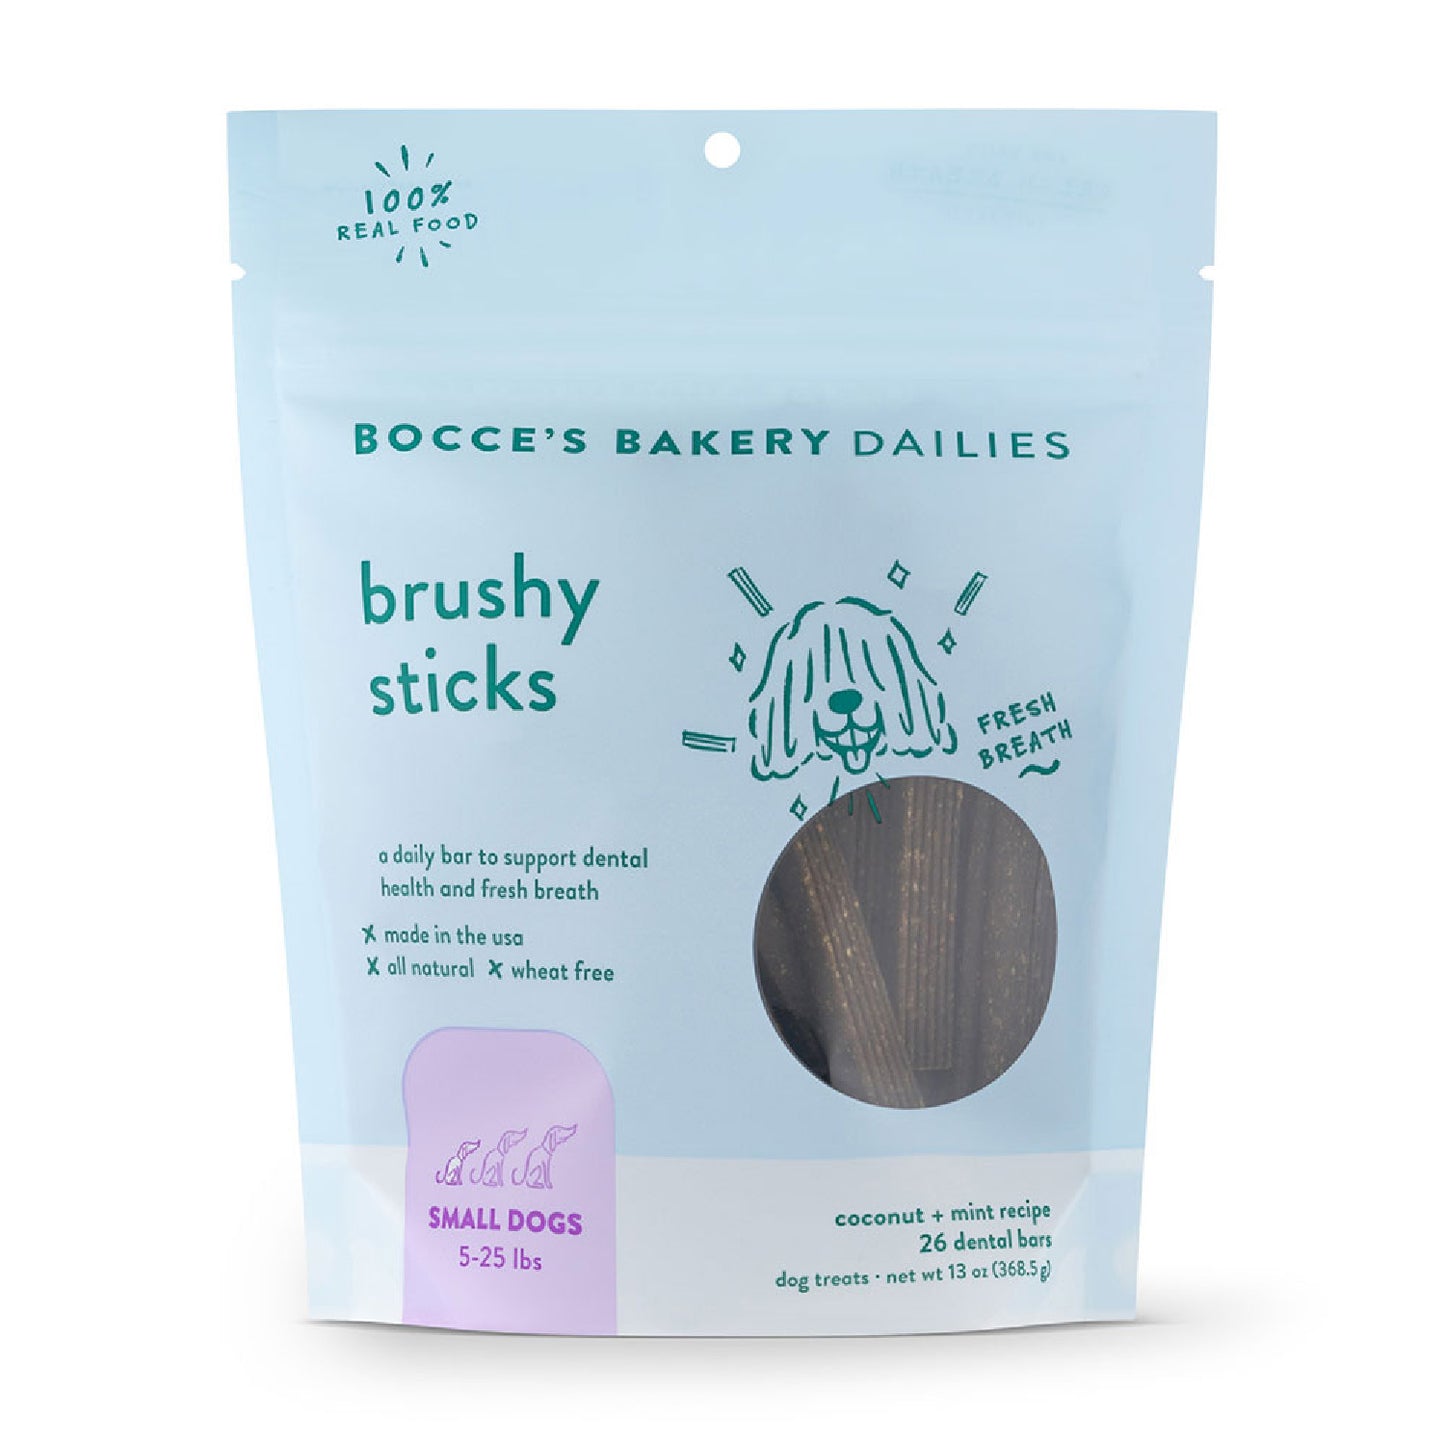 Bocce's Bakery Dailies Brushy Sticks